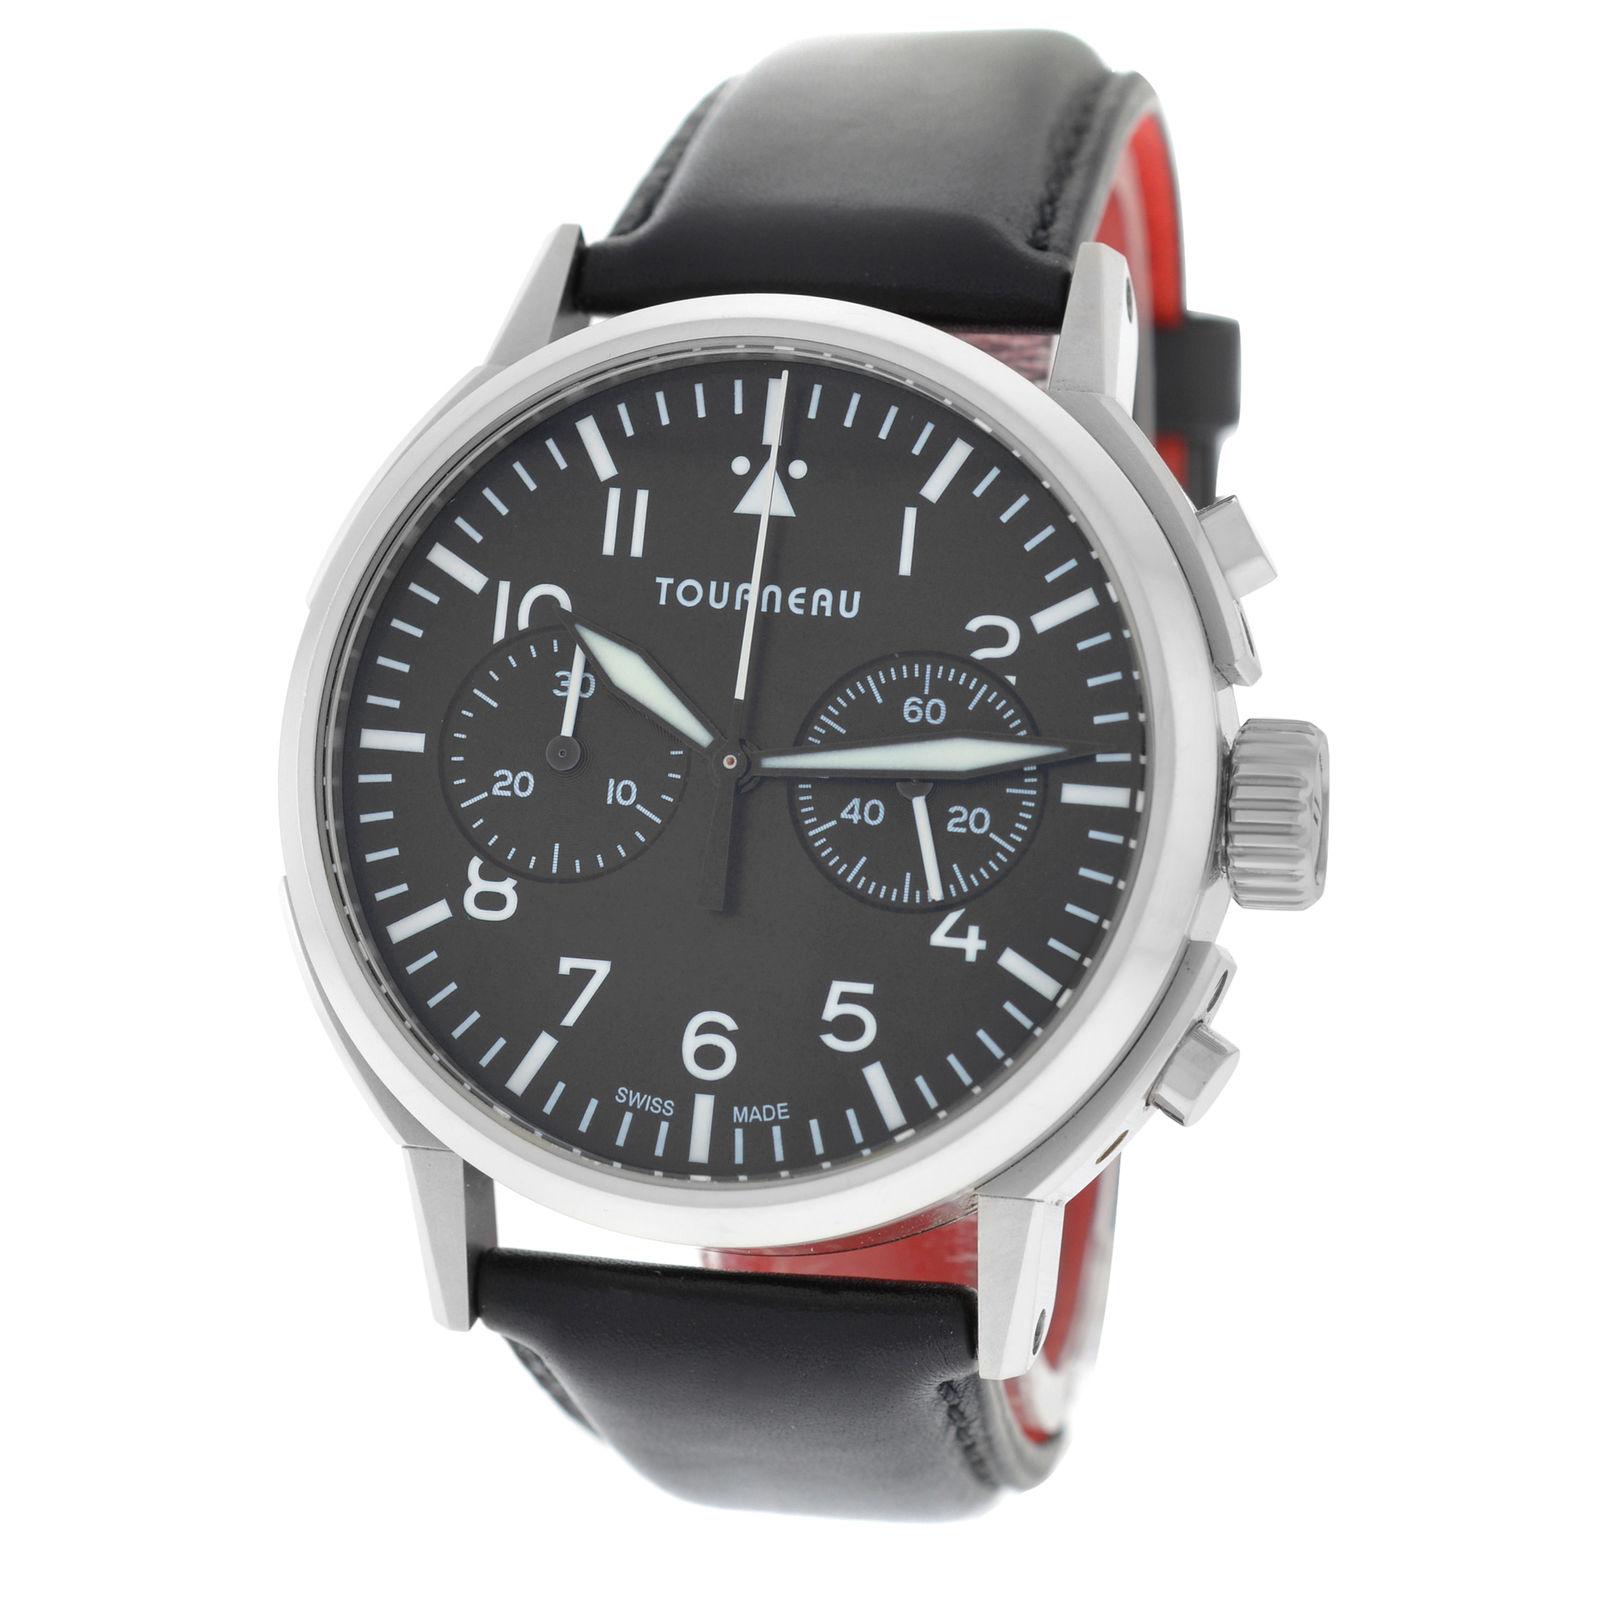 Authentic Men's Tourneau Aviator TNY 400301 Automatic Chronograph Watch For Sale